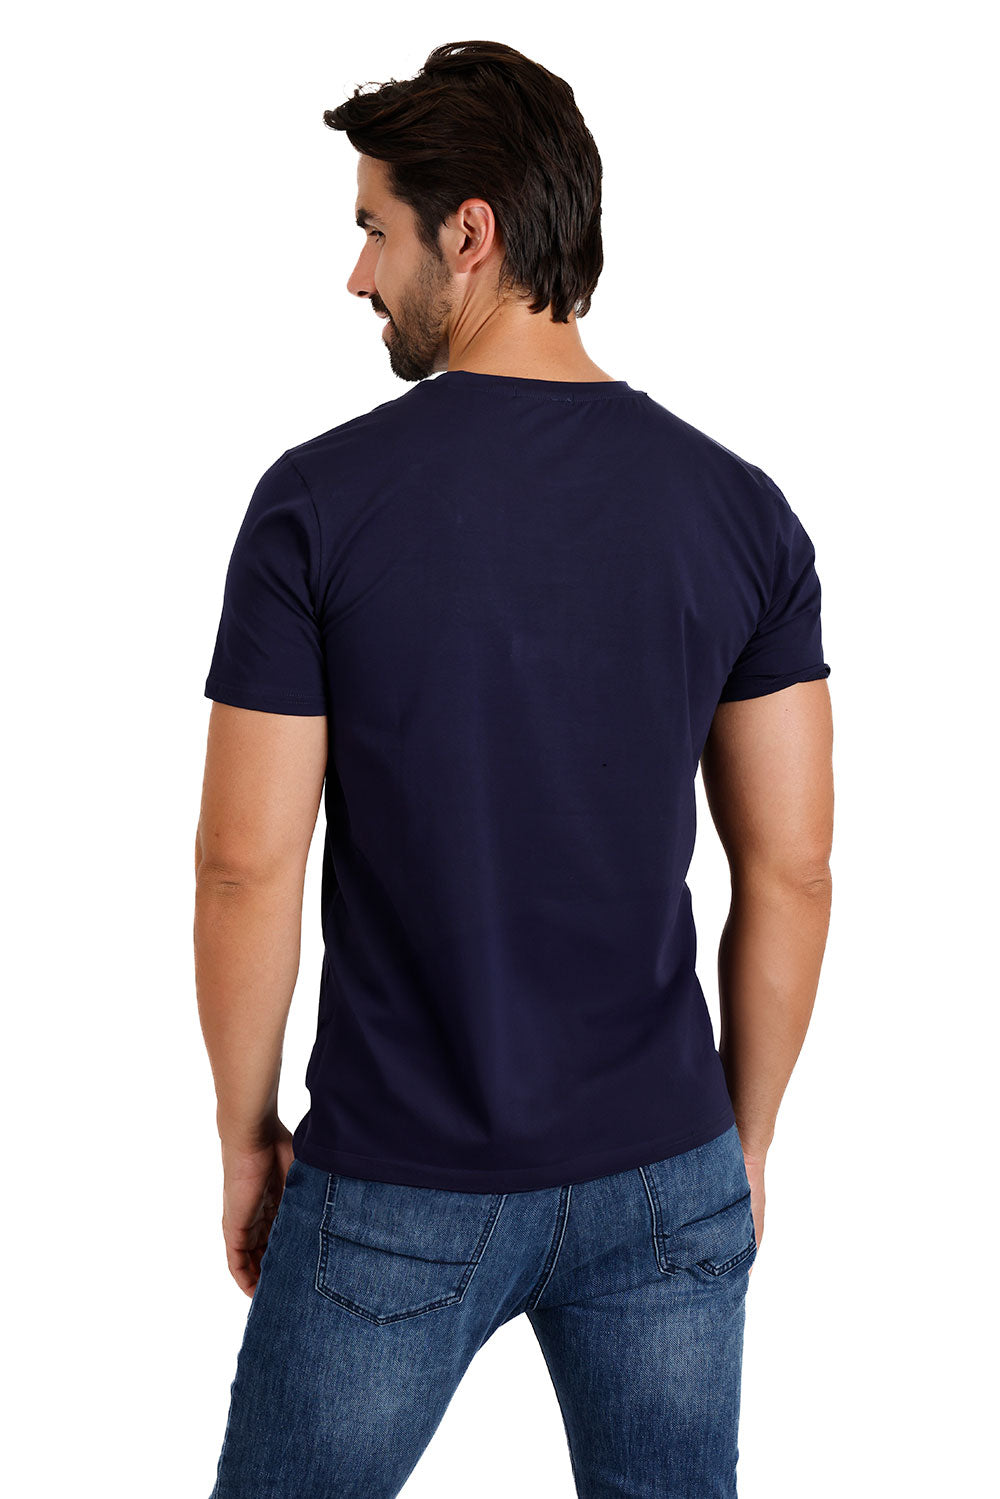 BARABAS Men's Basic Solid Color Crew-neck T-shirts ST933 Navy